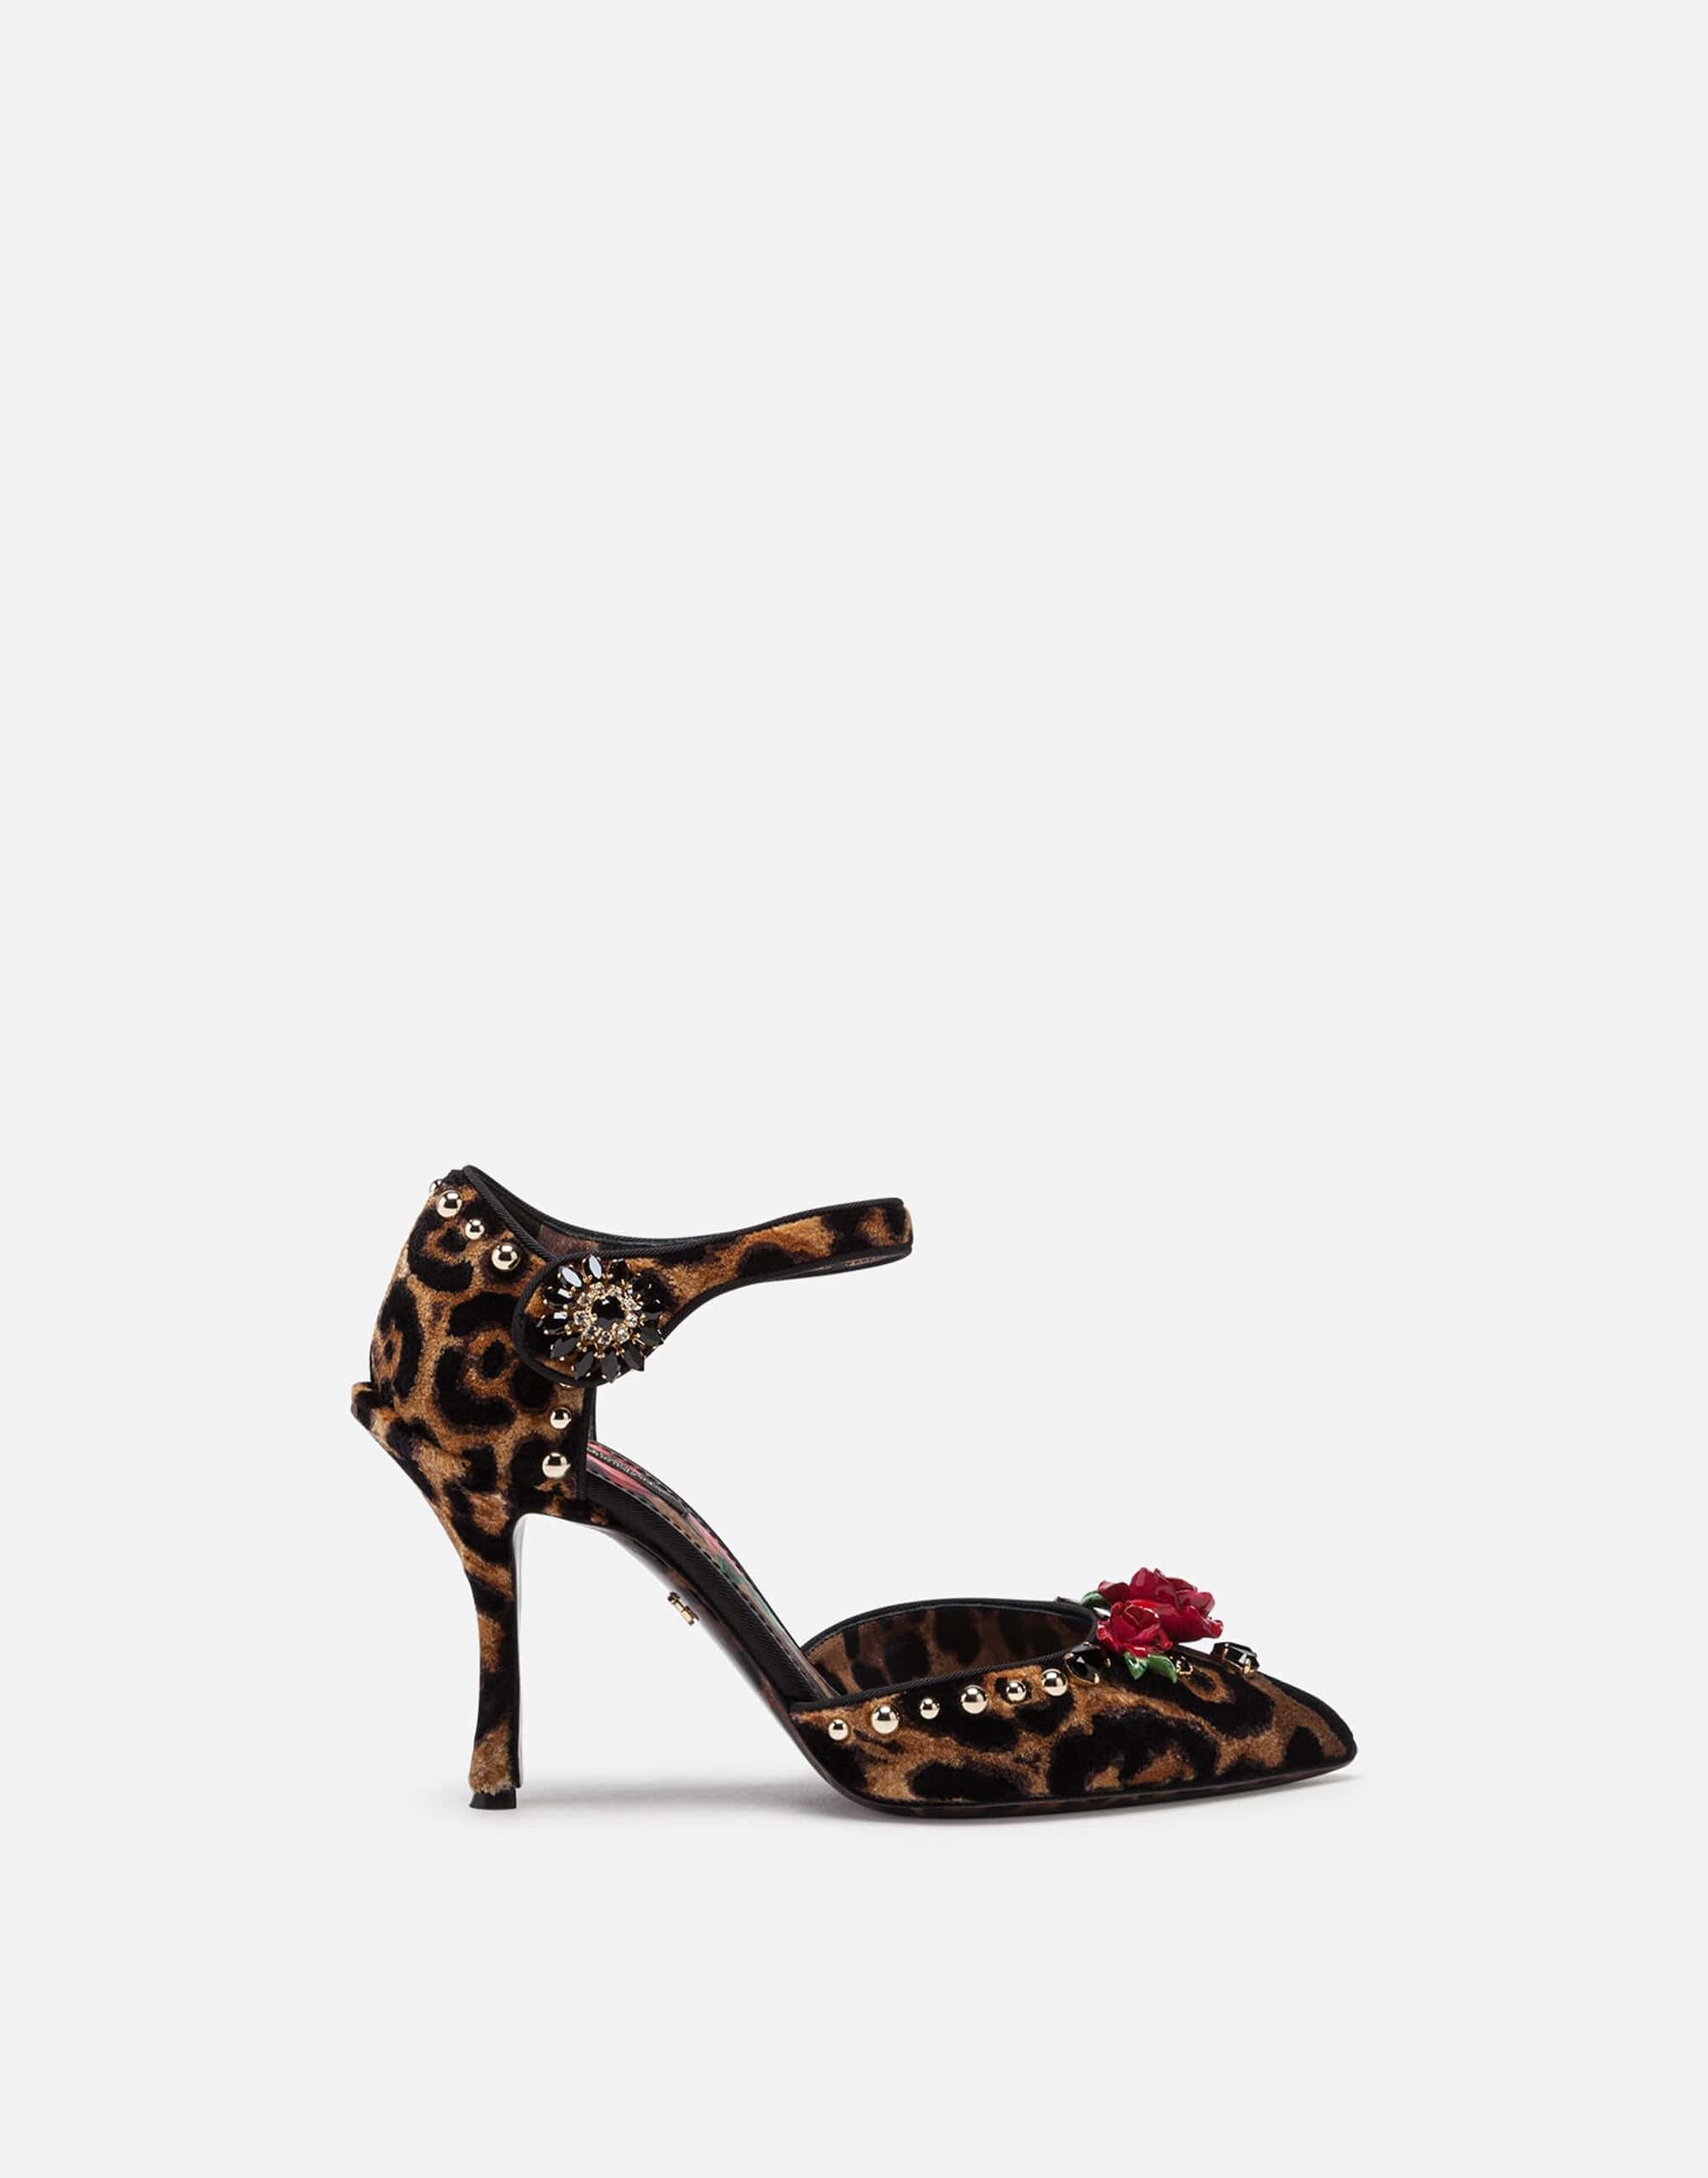 Lucky Brand Womens Tukko Ankle Strap Heels Sz 9 M Leather Leopard Print